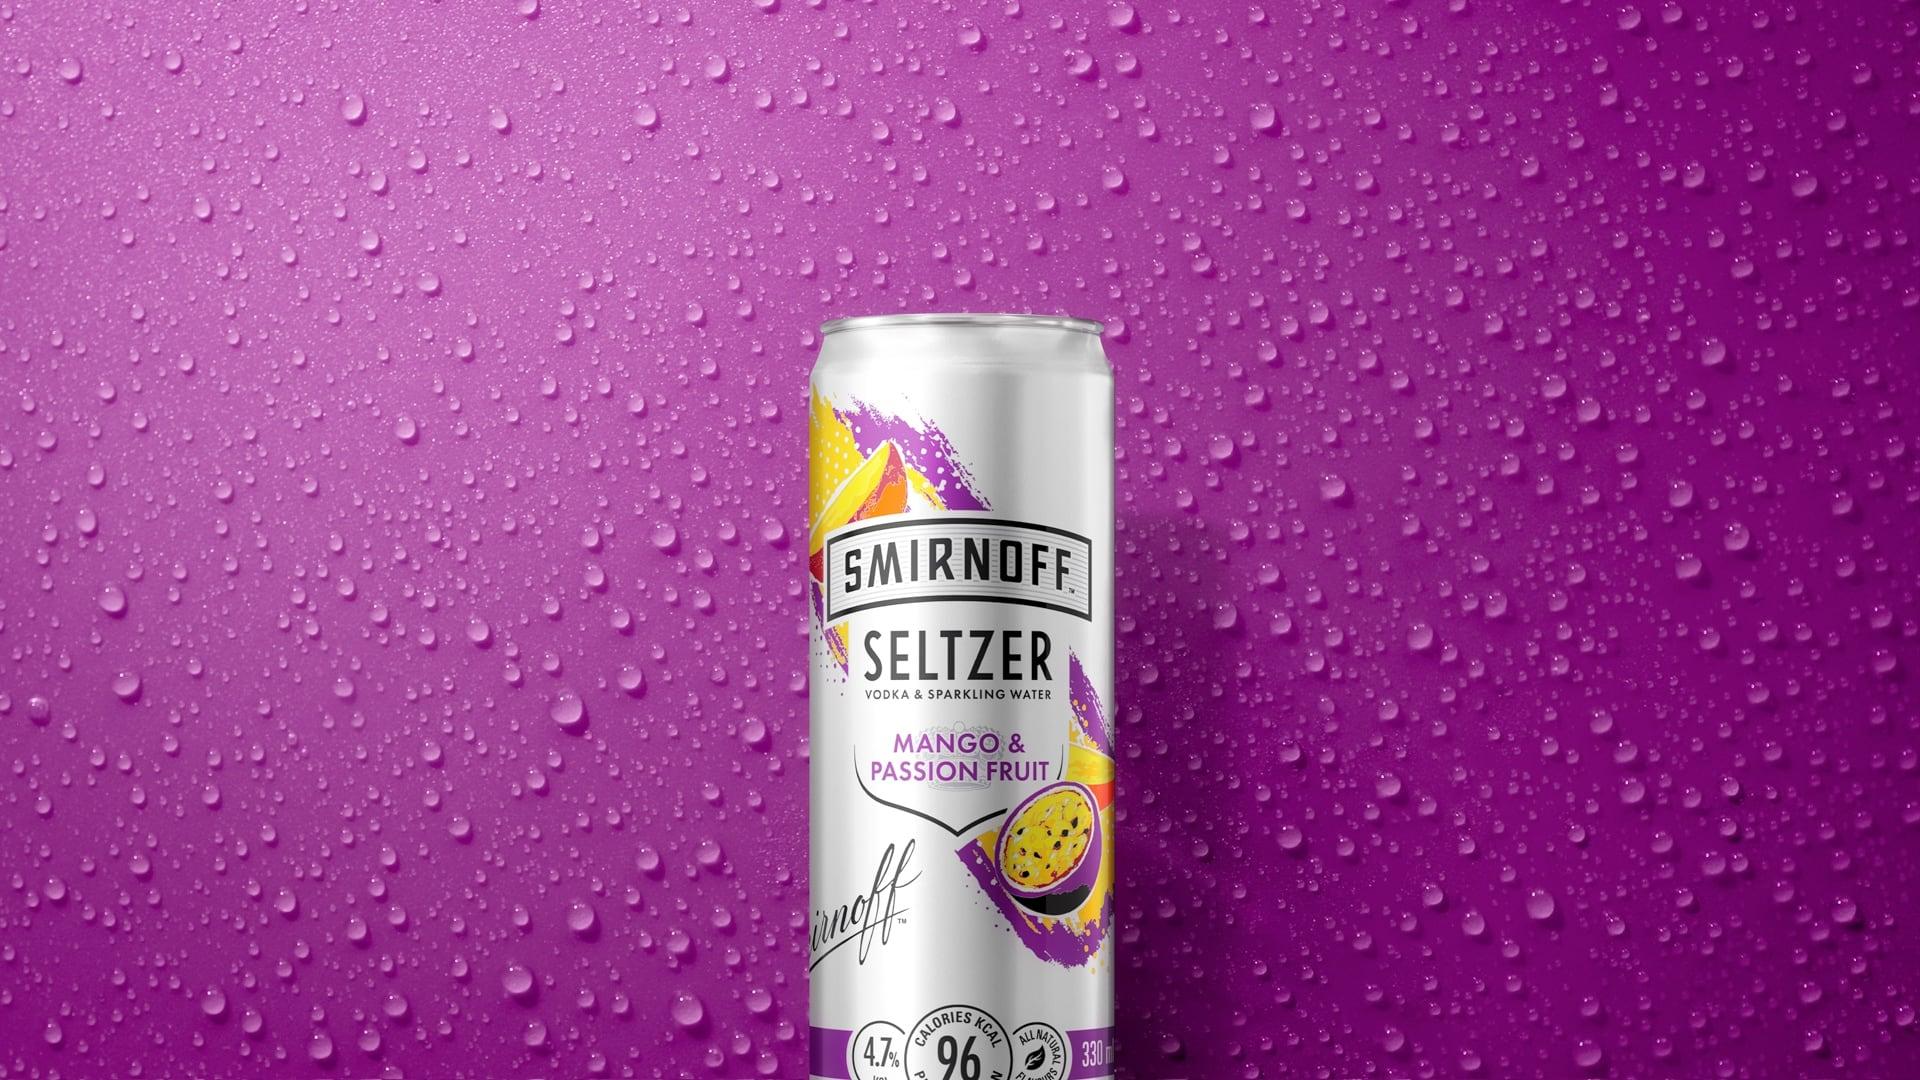 Mango Passionfruit Seltzer on a textured purple background